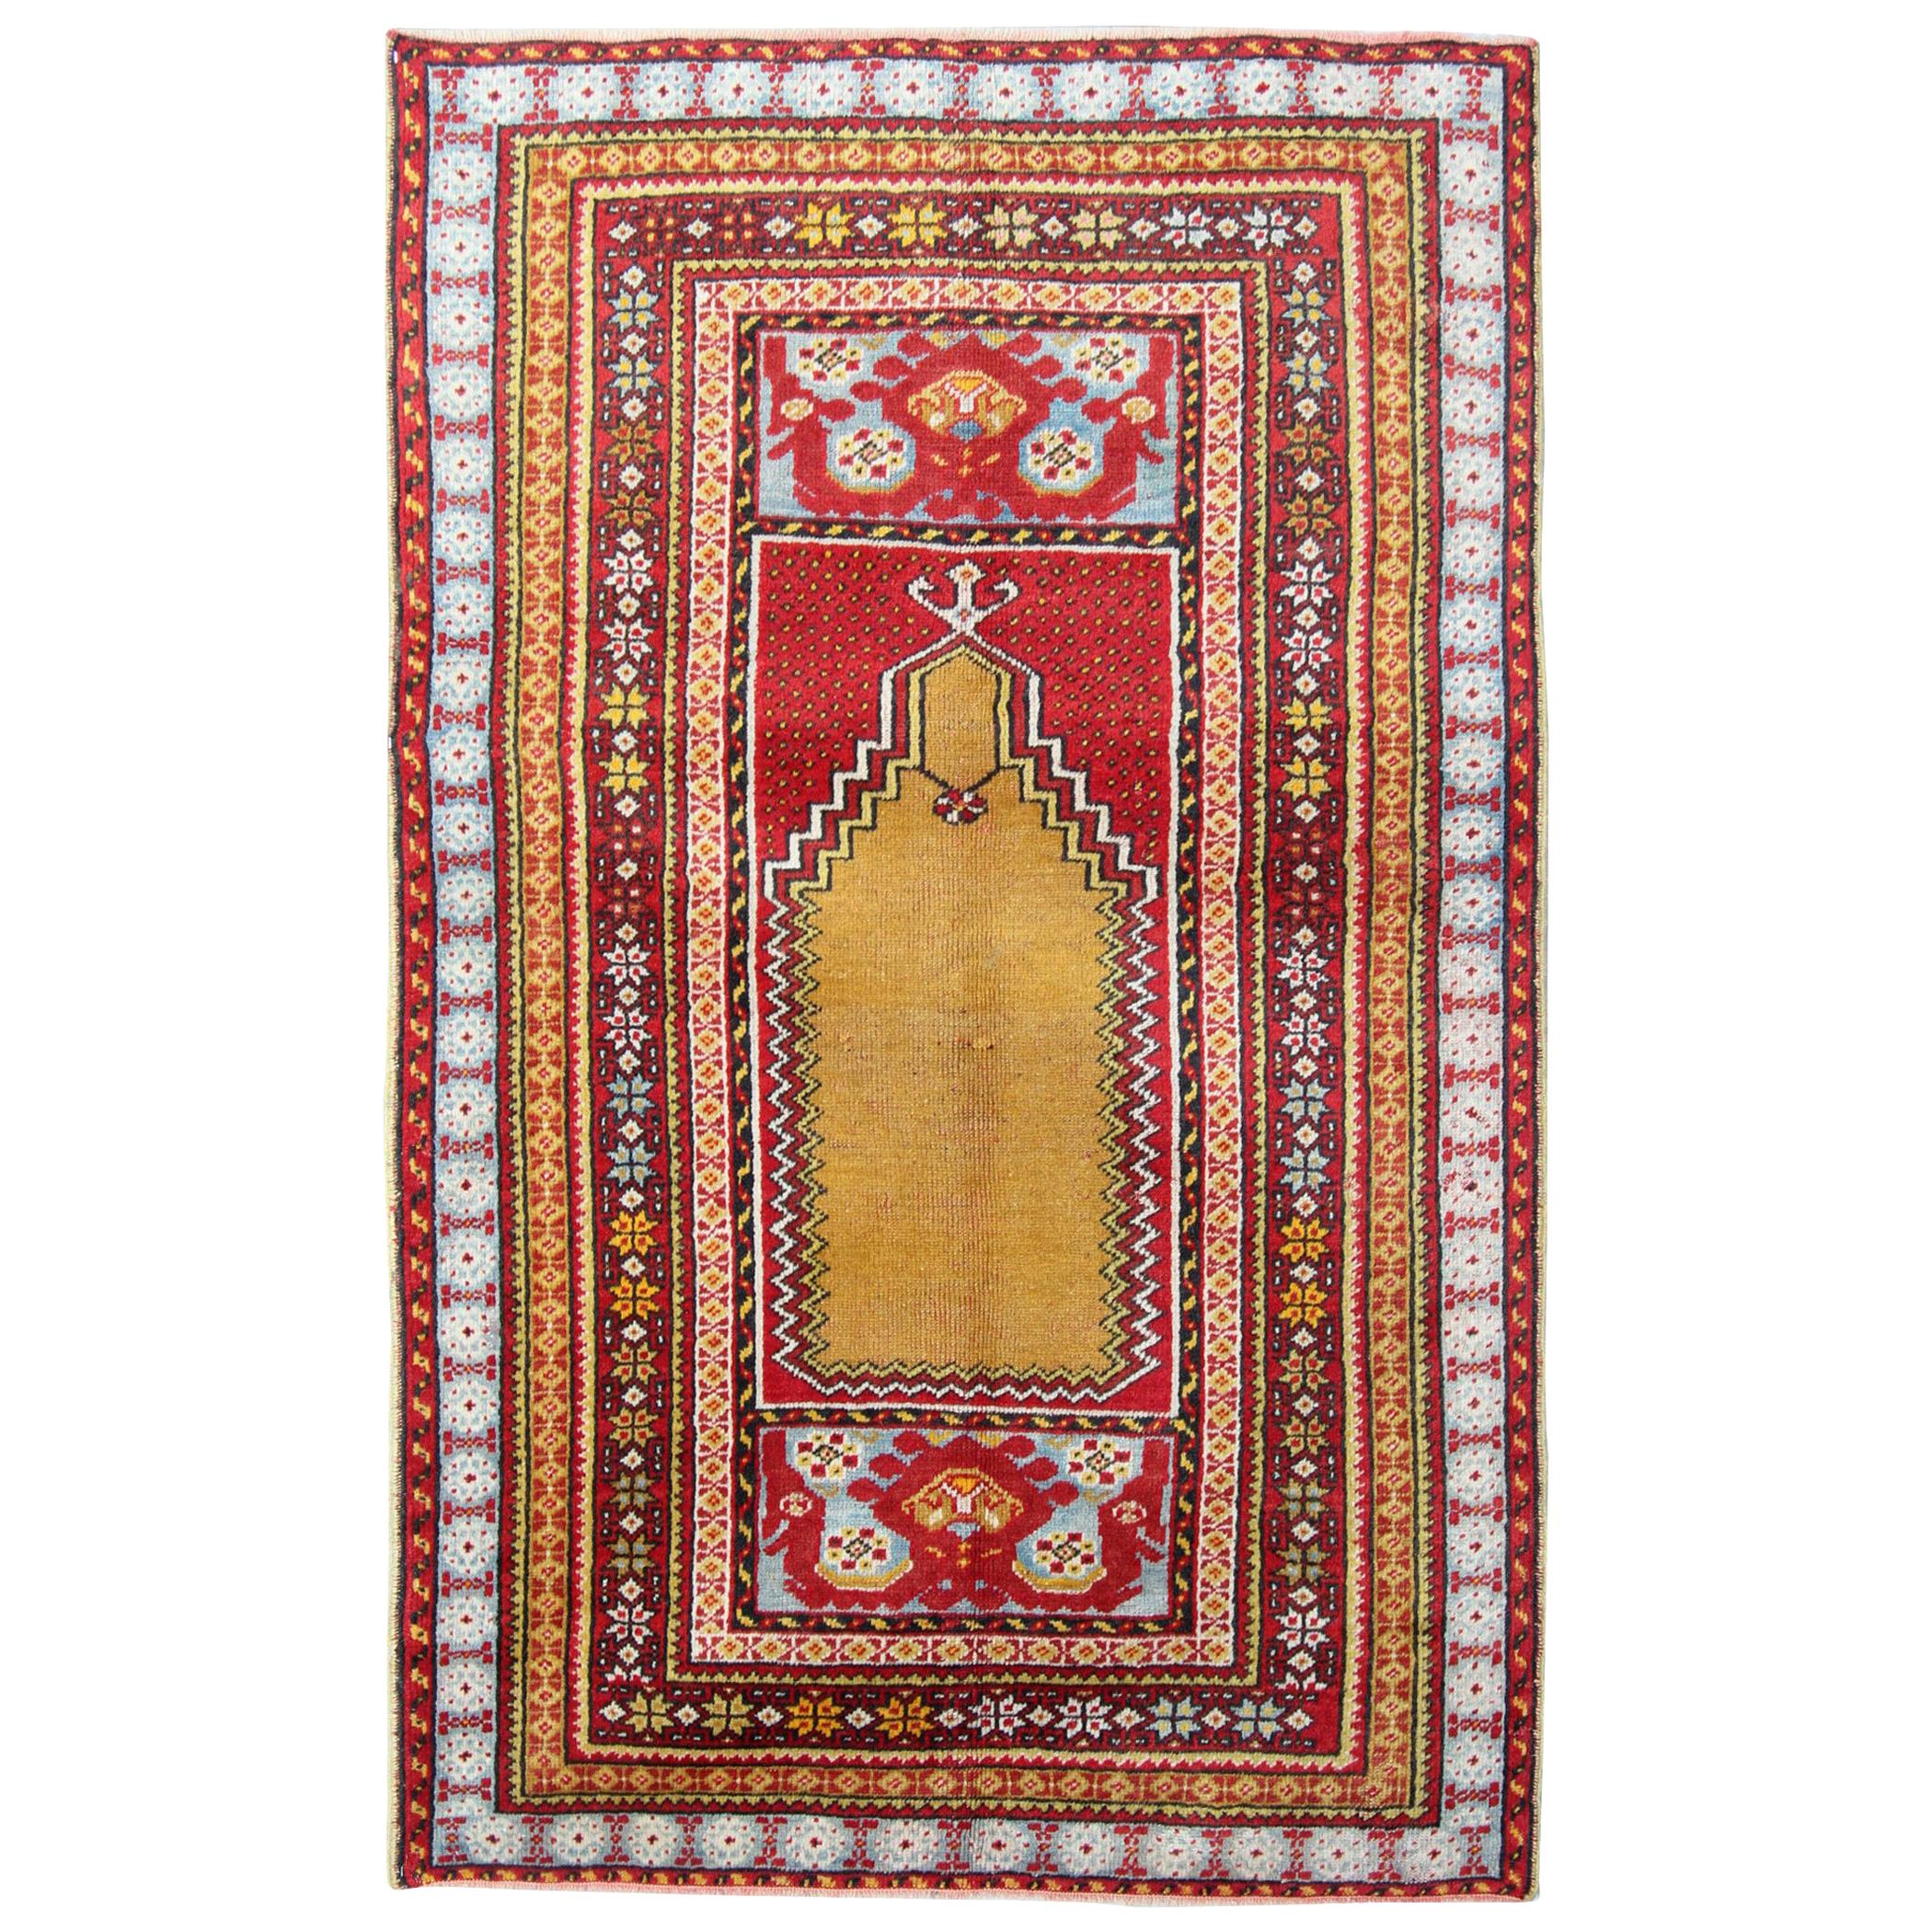 Antique Rugs Handmade Prayer Rug, Turkish Living Room Rug for Sale Home Decor For Sale